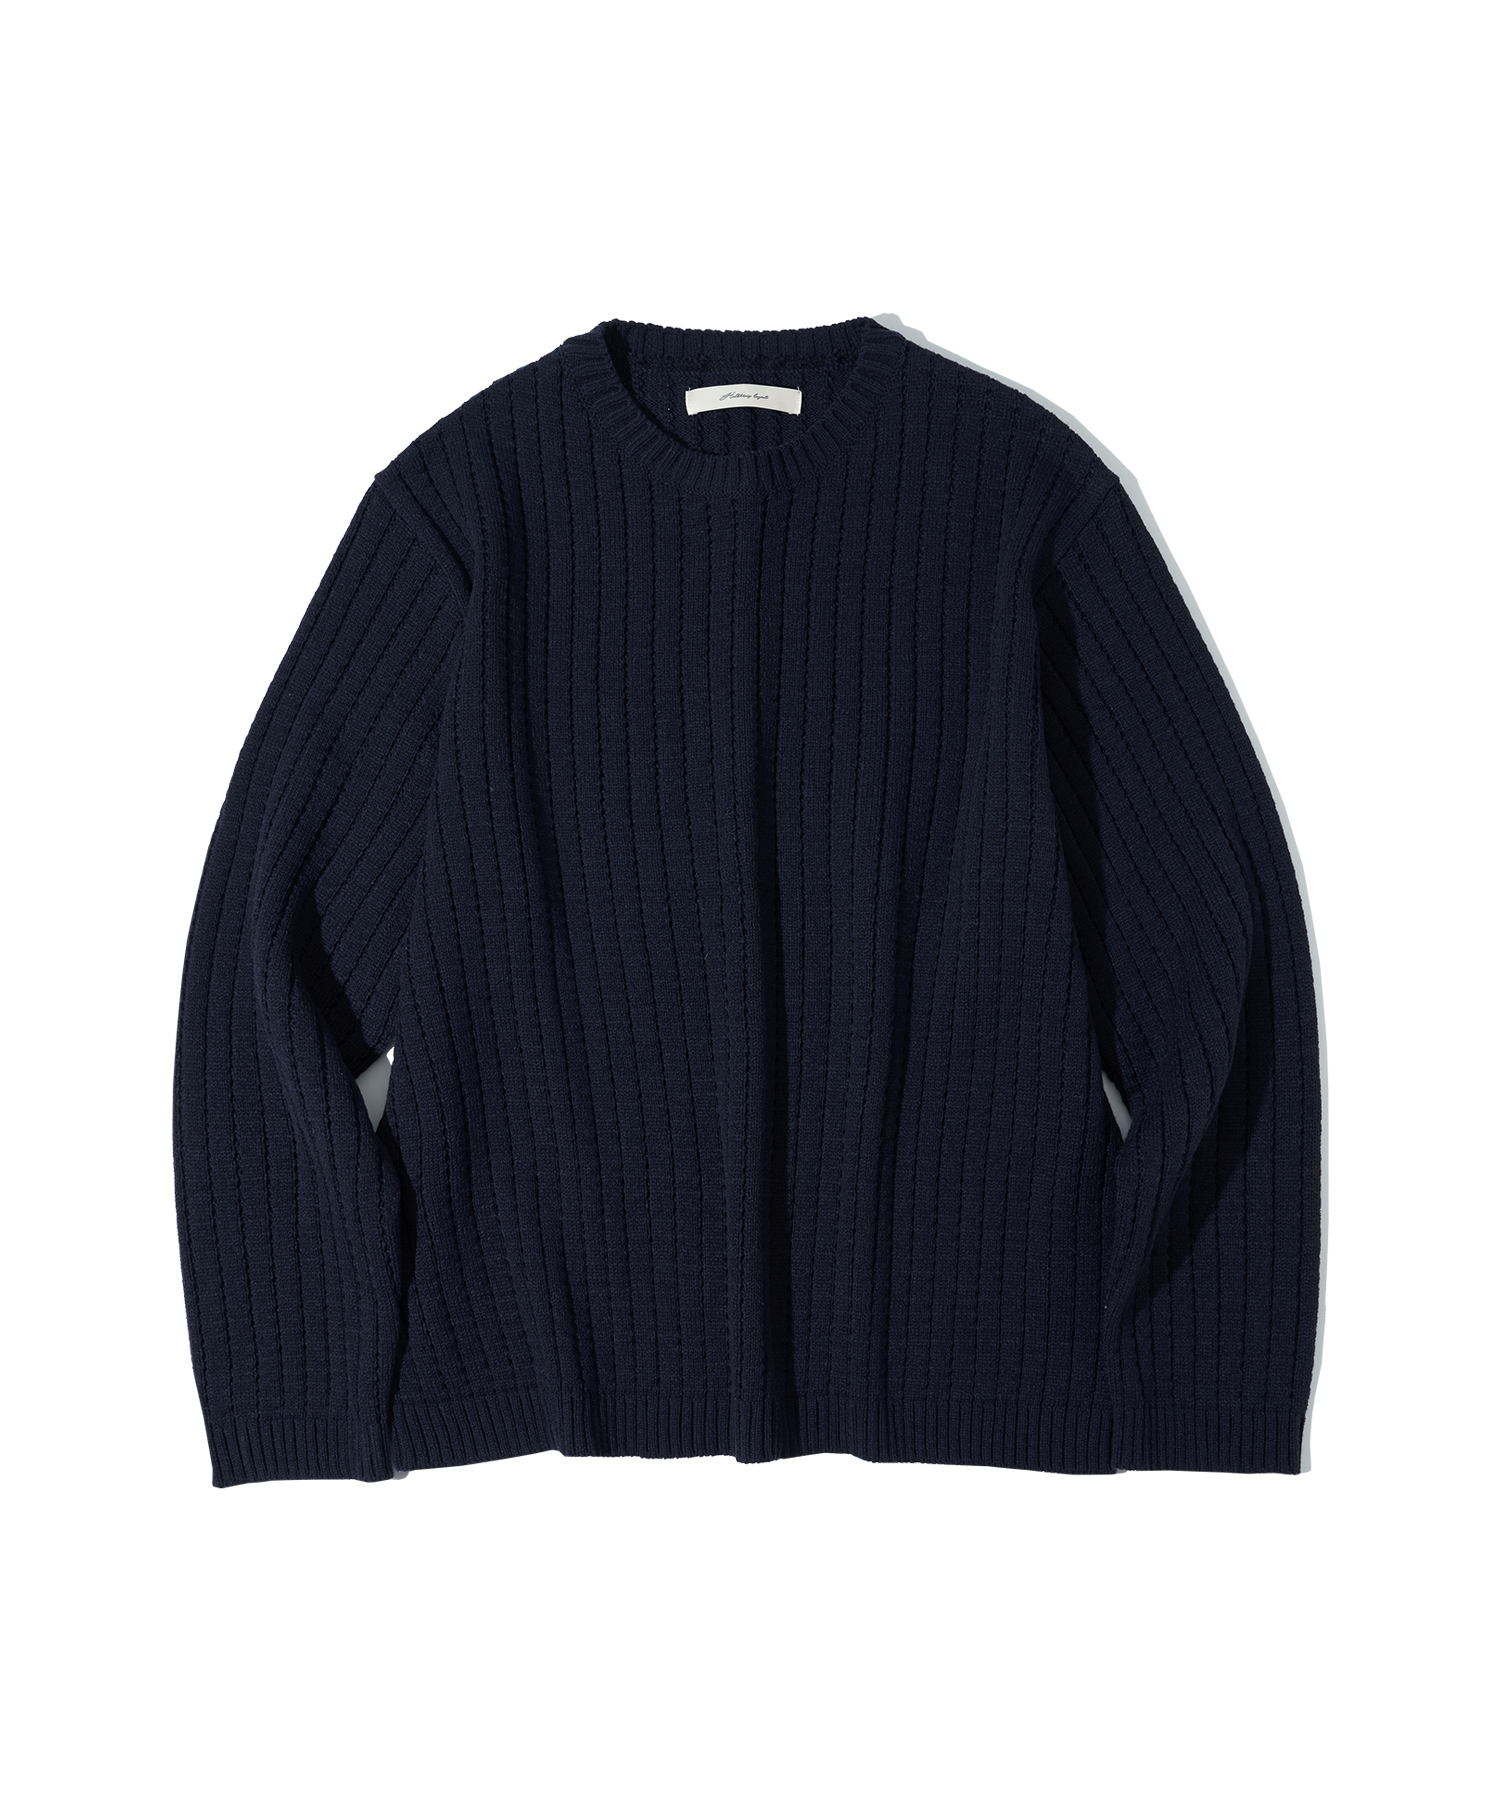 T20010 Hole round knit_Navy